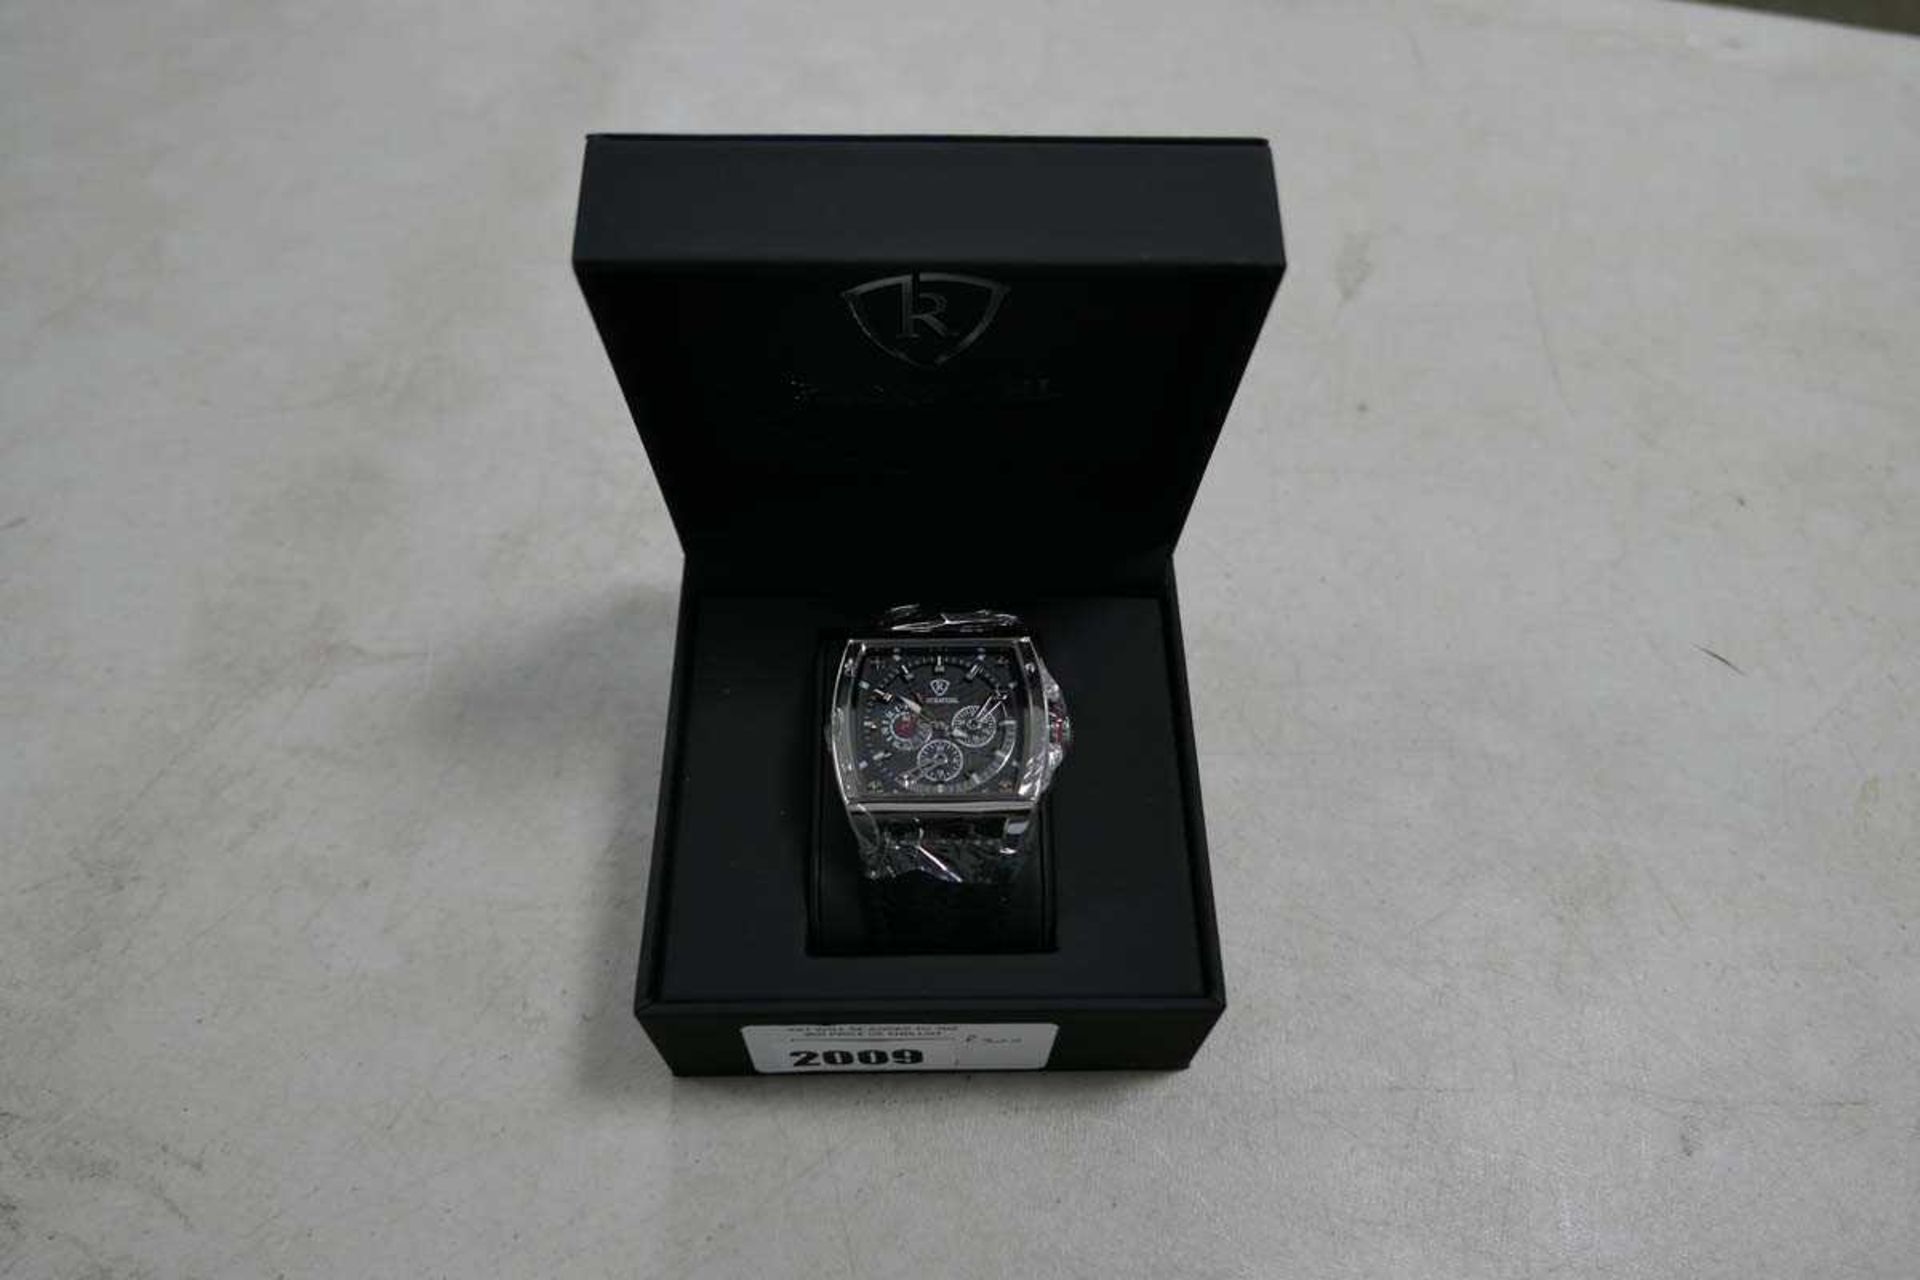 +VAT Ruckstuhl R300 chronograph watch with box